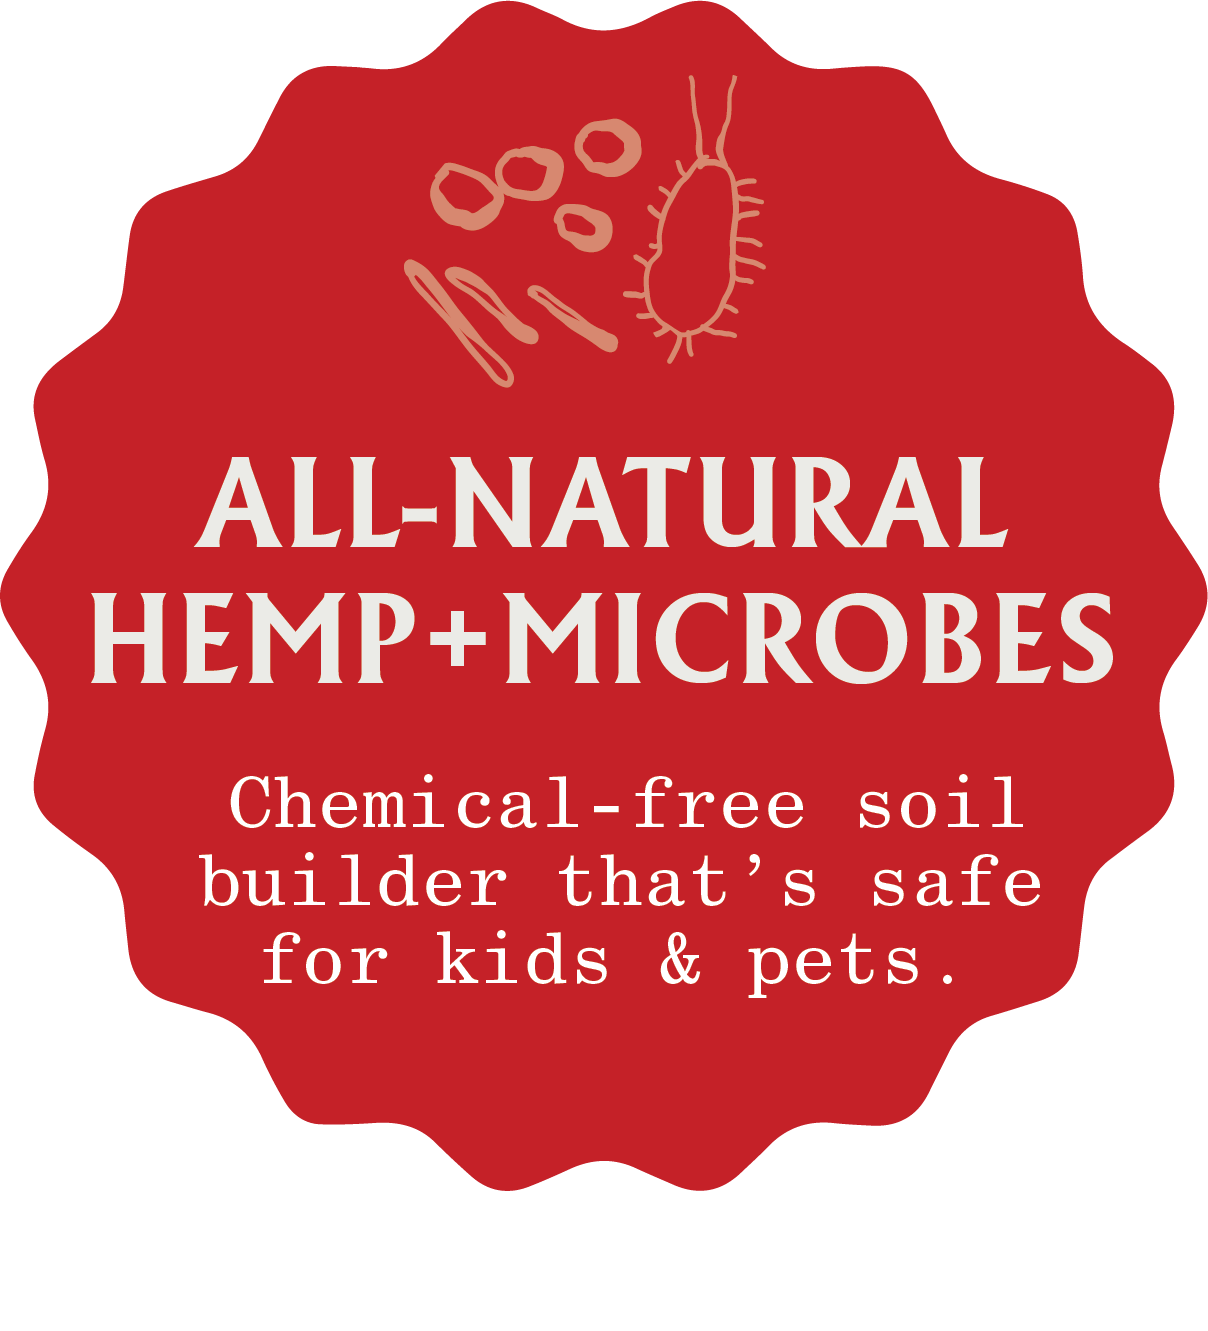 All natural hemp kenaf and microbes safe soil builder 